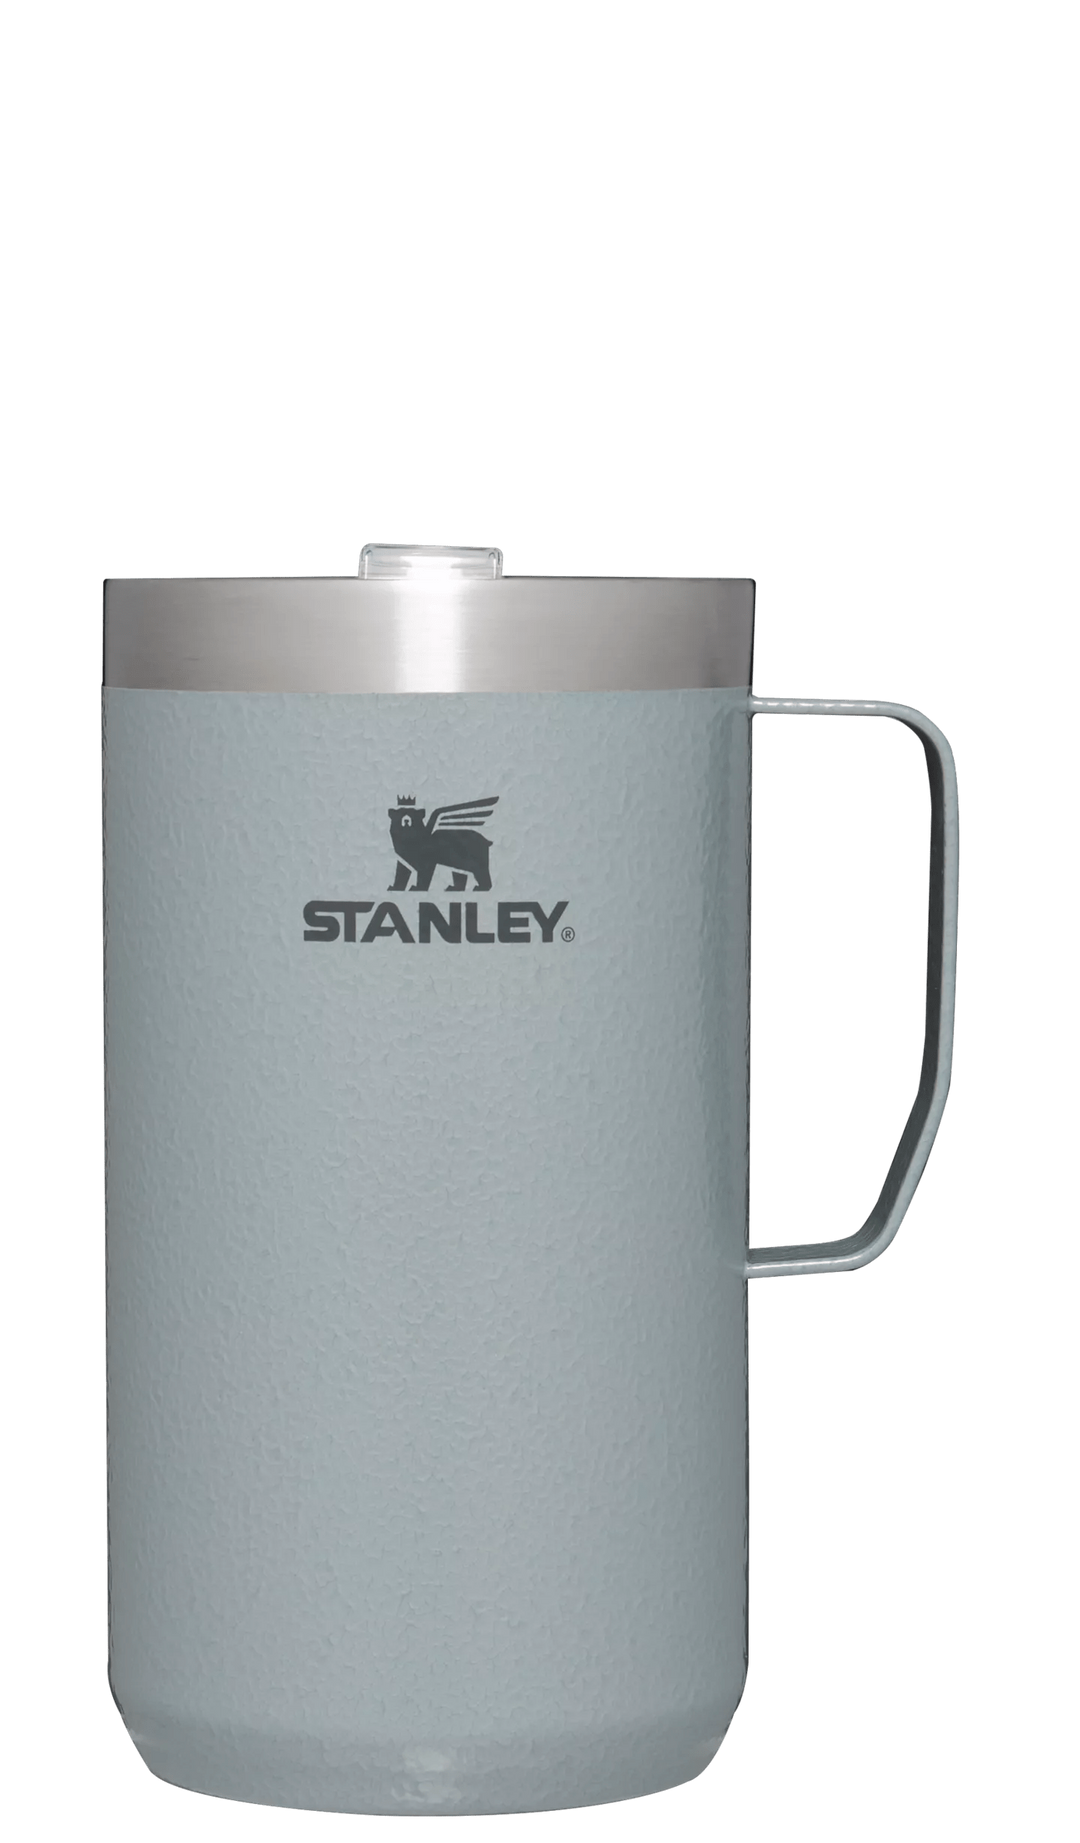 Stanley 24 Oz Stay Hot Camp Mug in Hammertone Silver